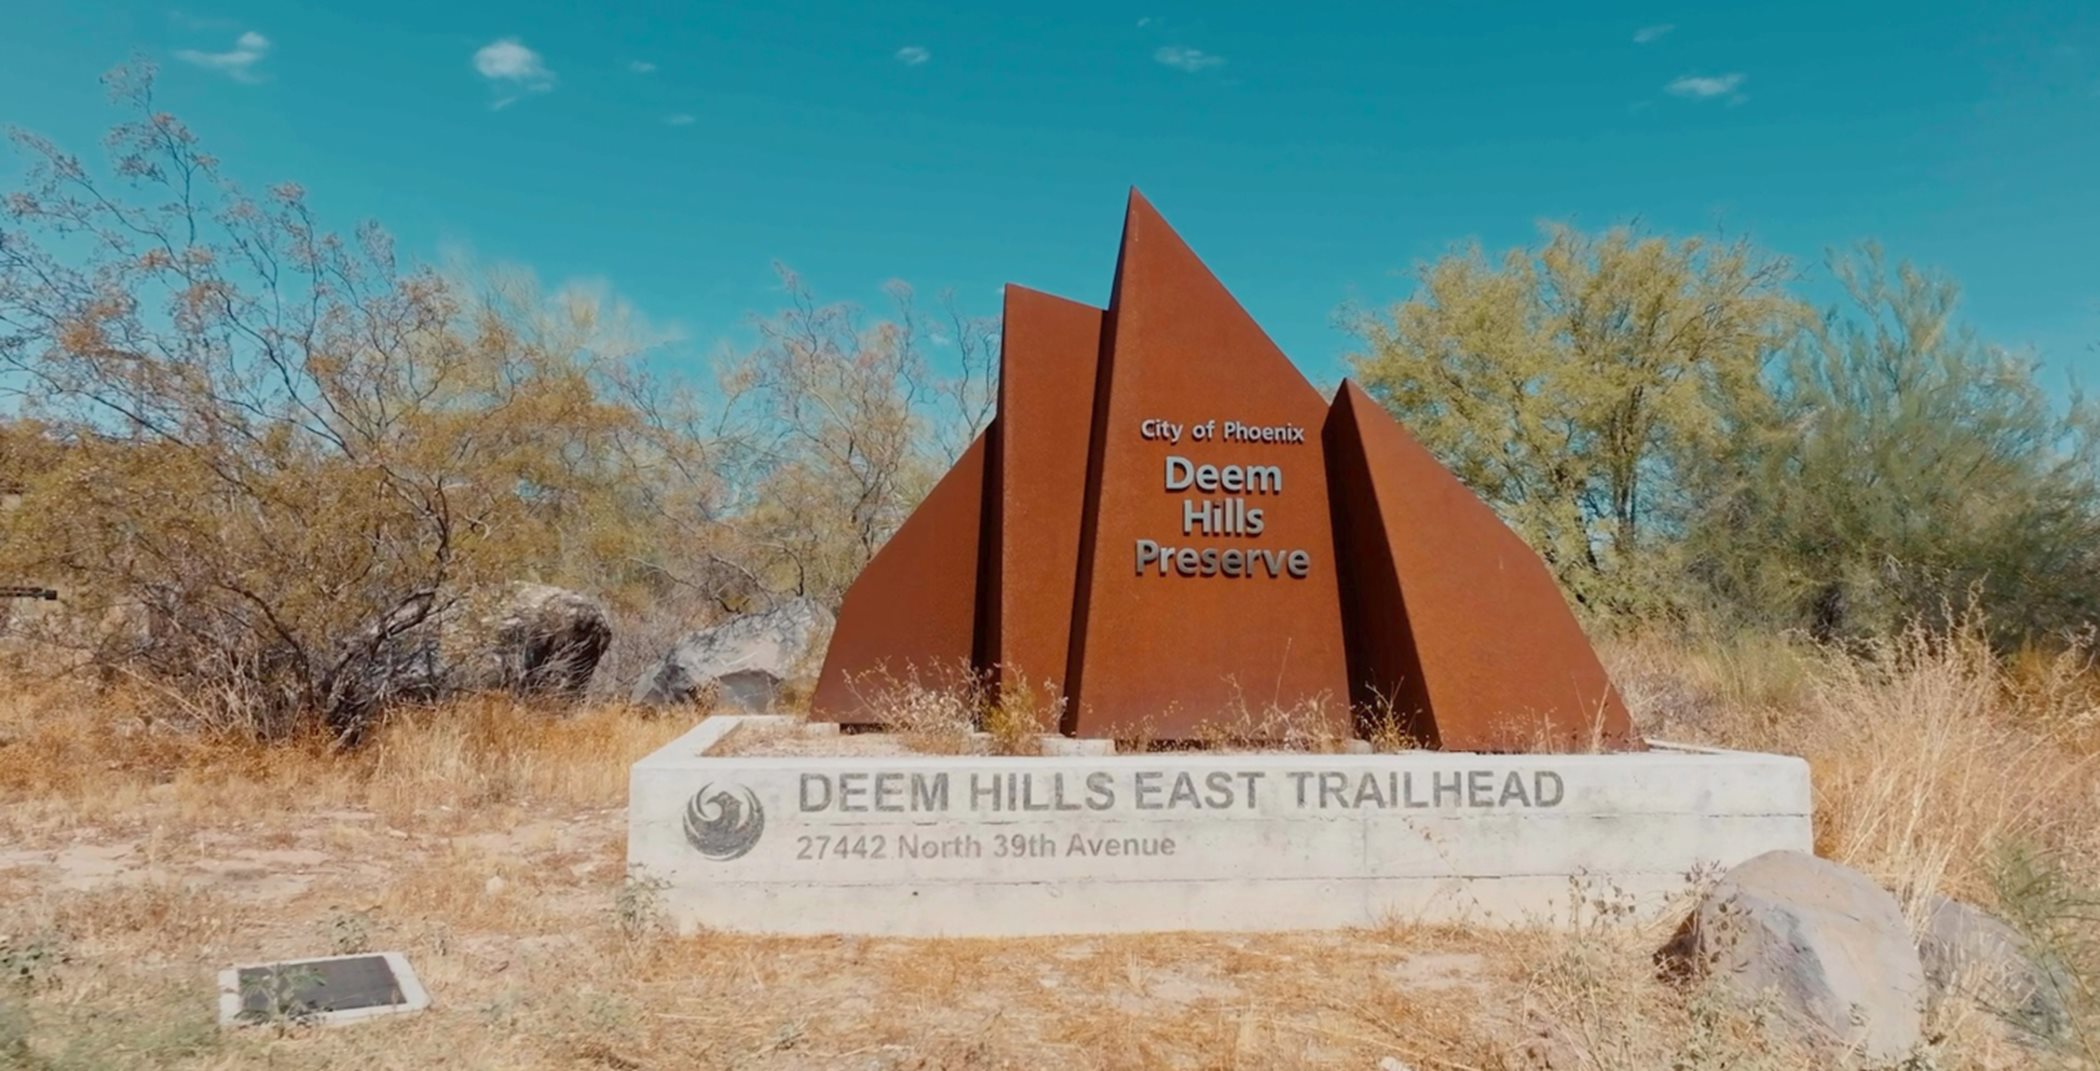 Deem Hills entry monument